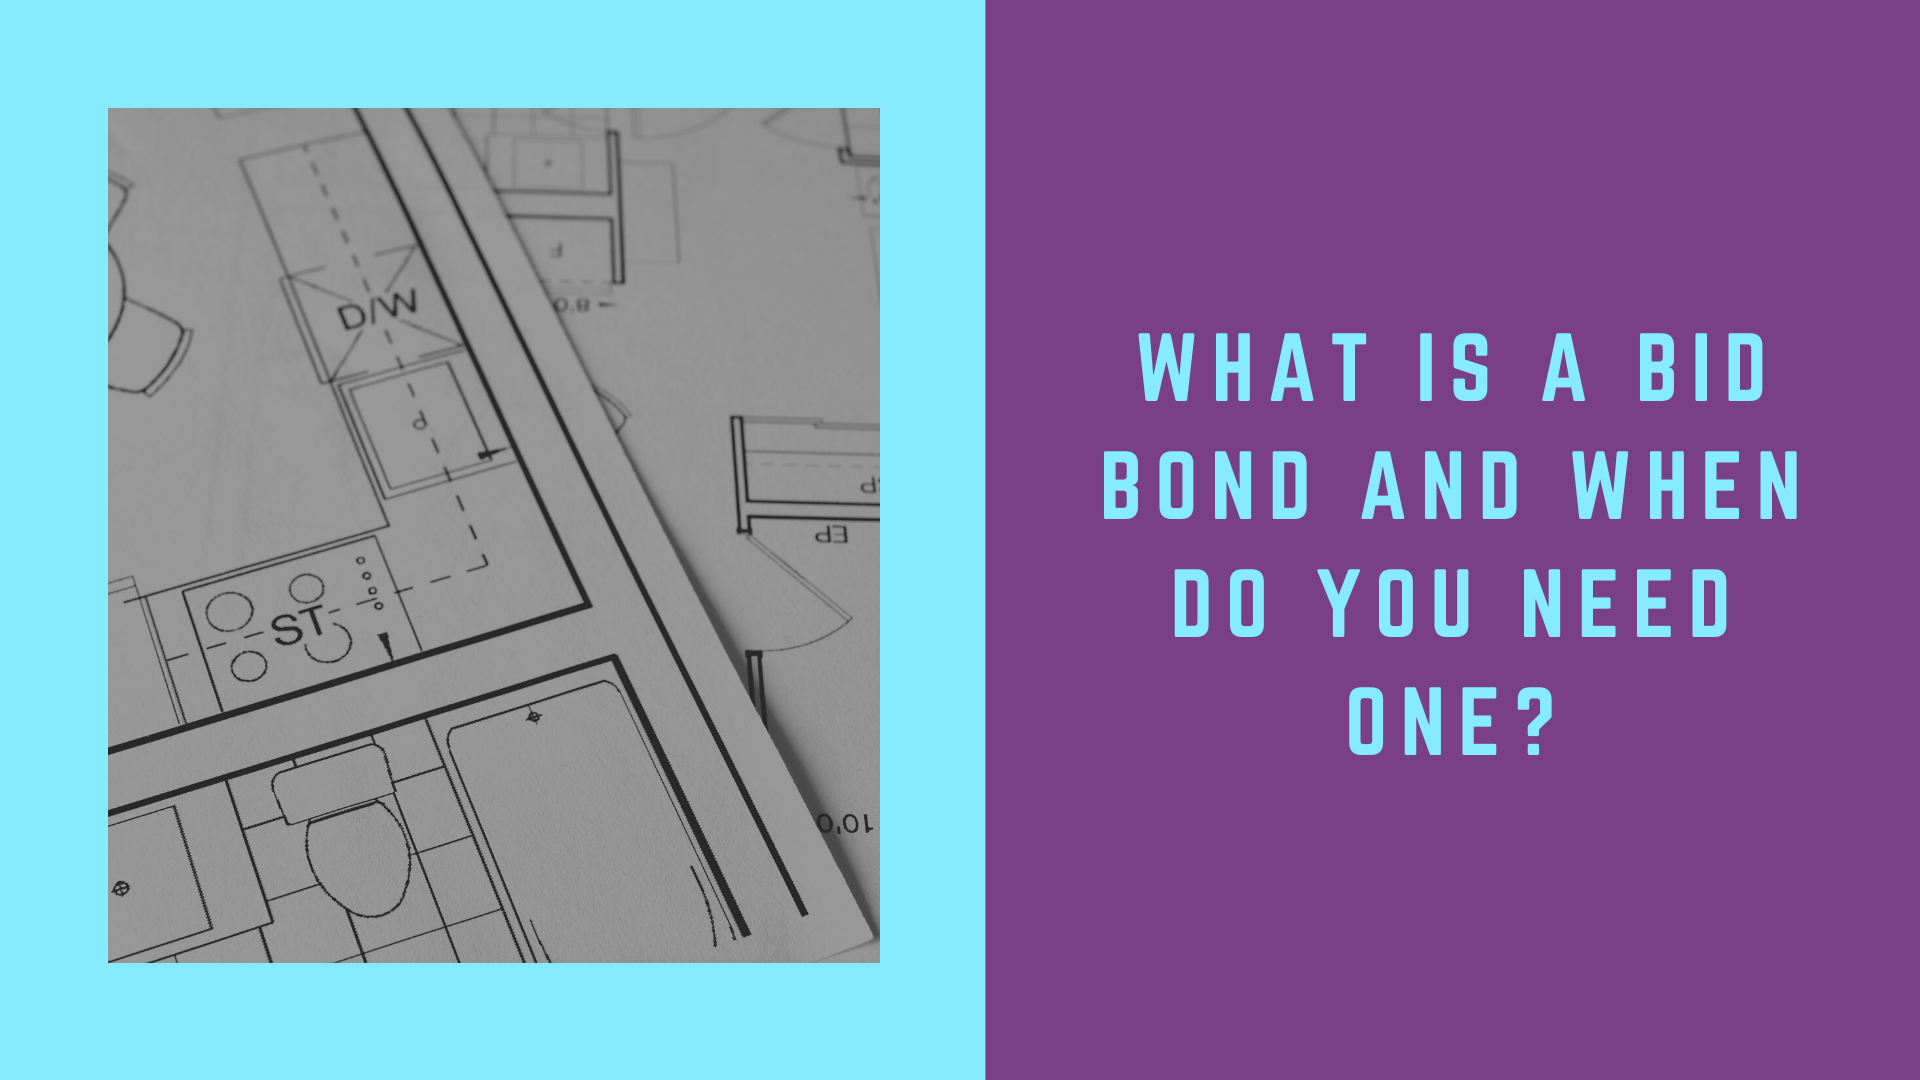 bid bonds - What is a bid bond - building plan